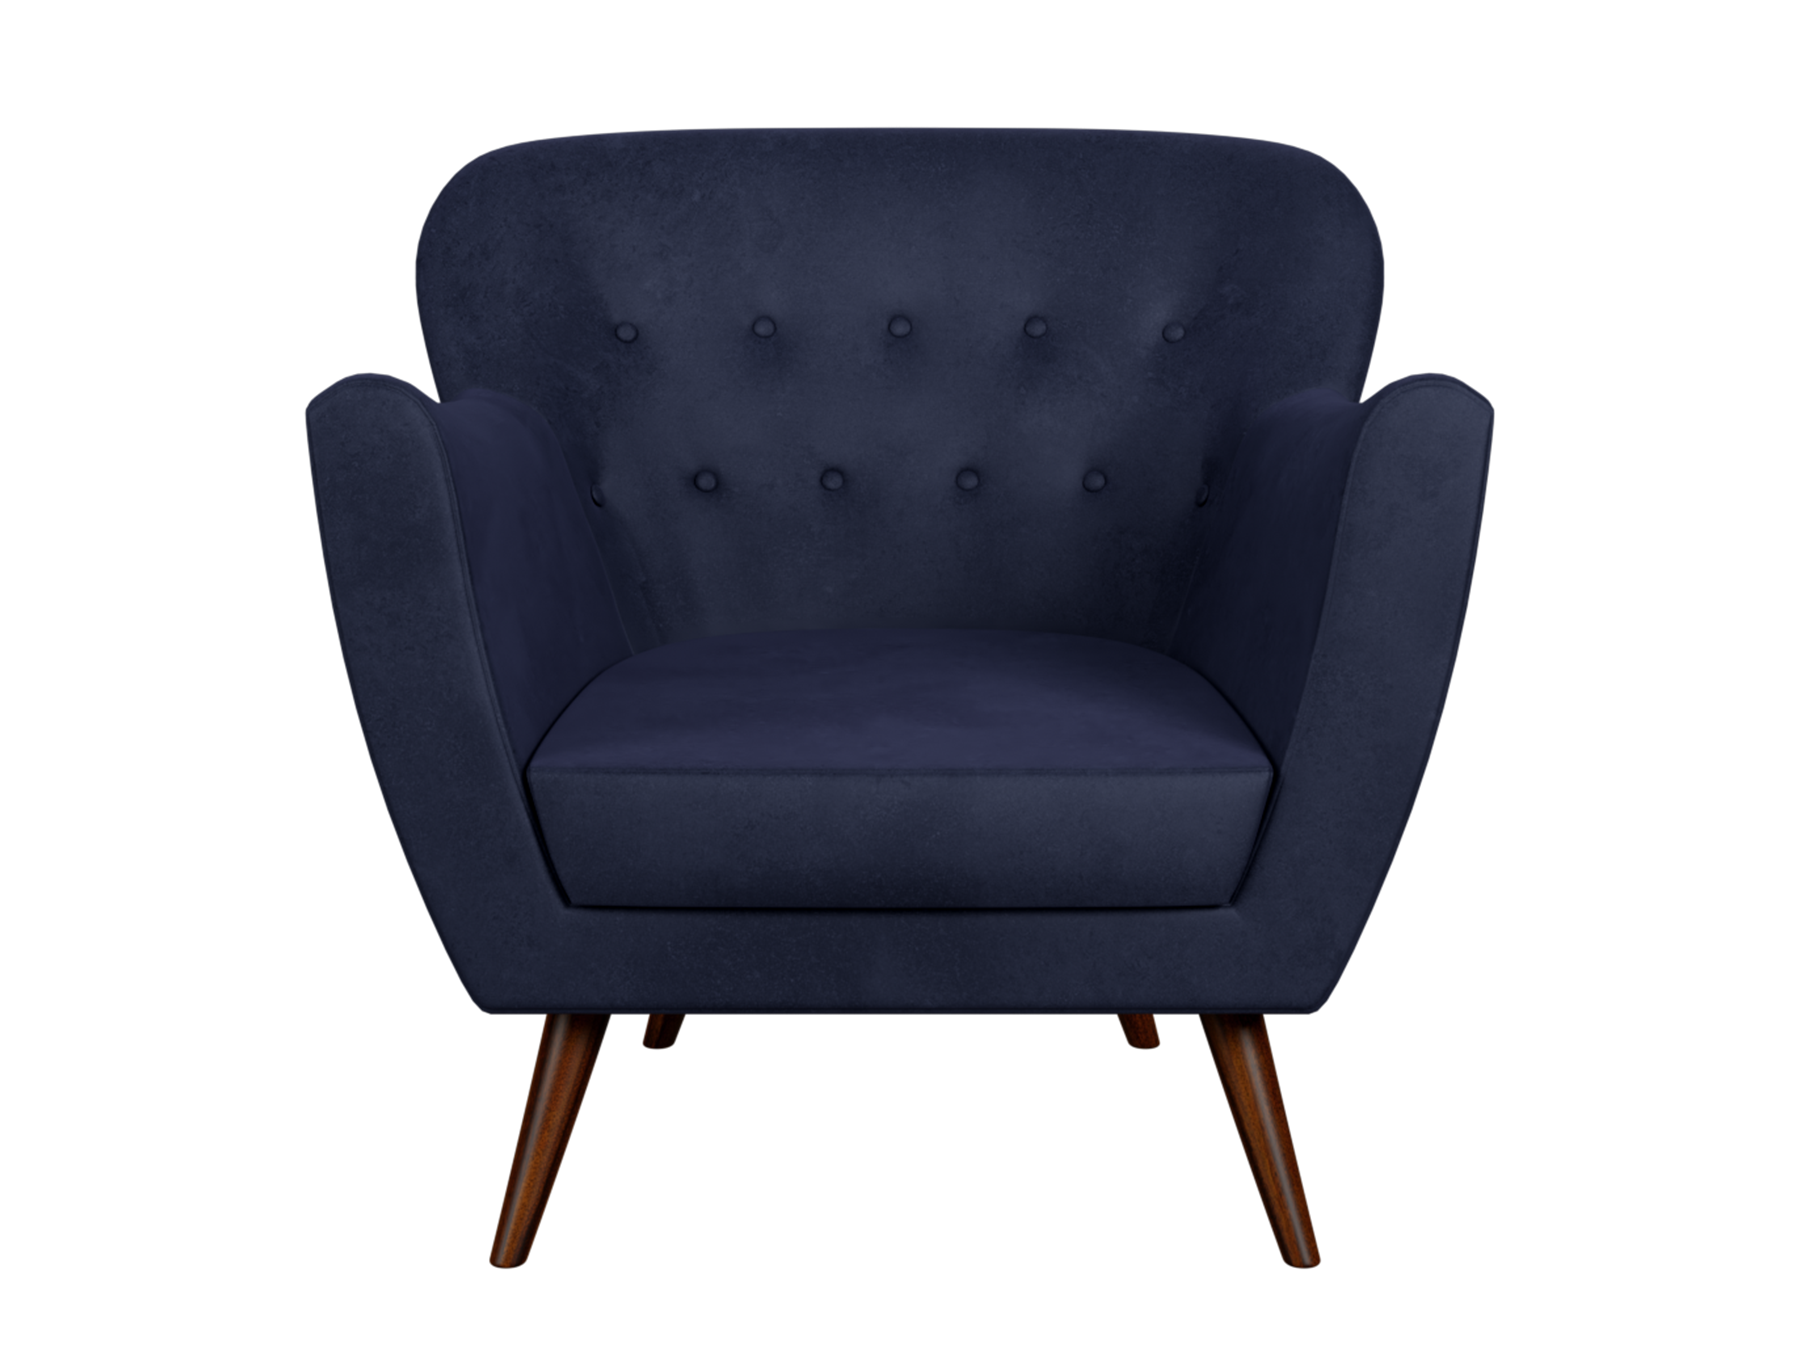 Bedroom Sofa Chair Alexa In Navy Blue Colour